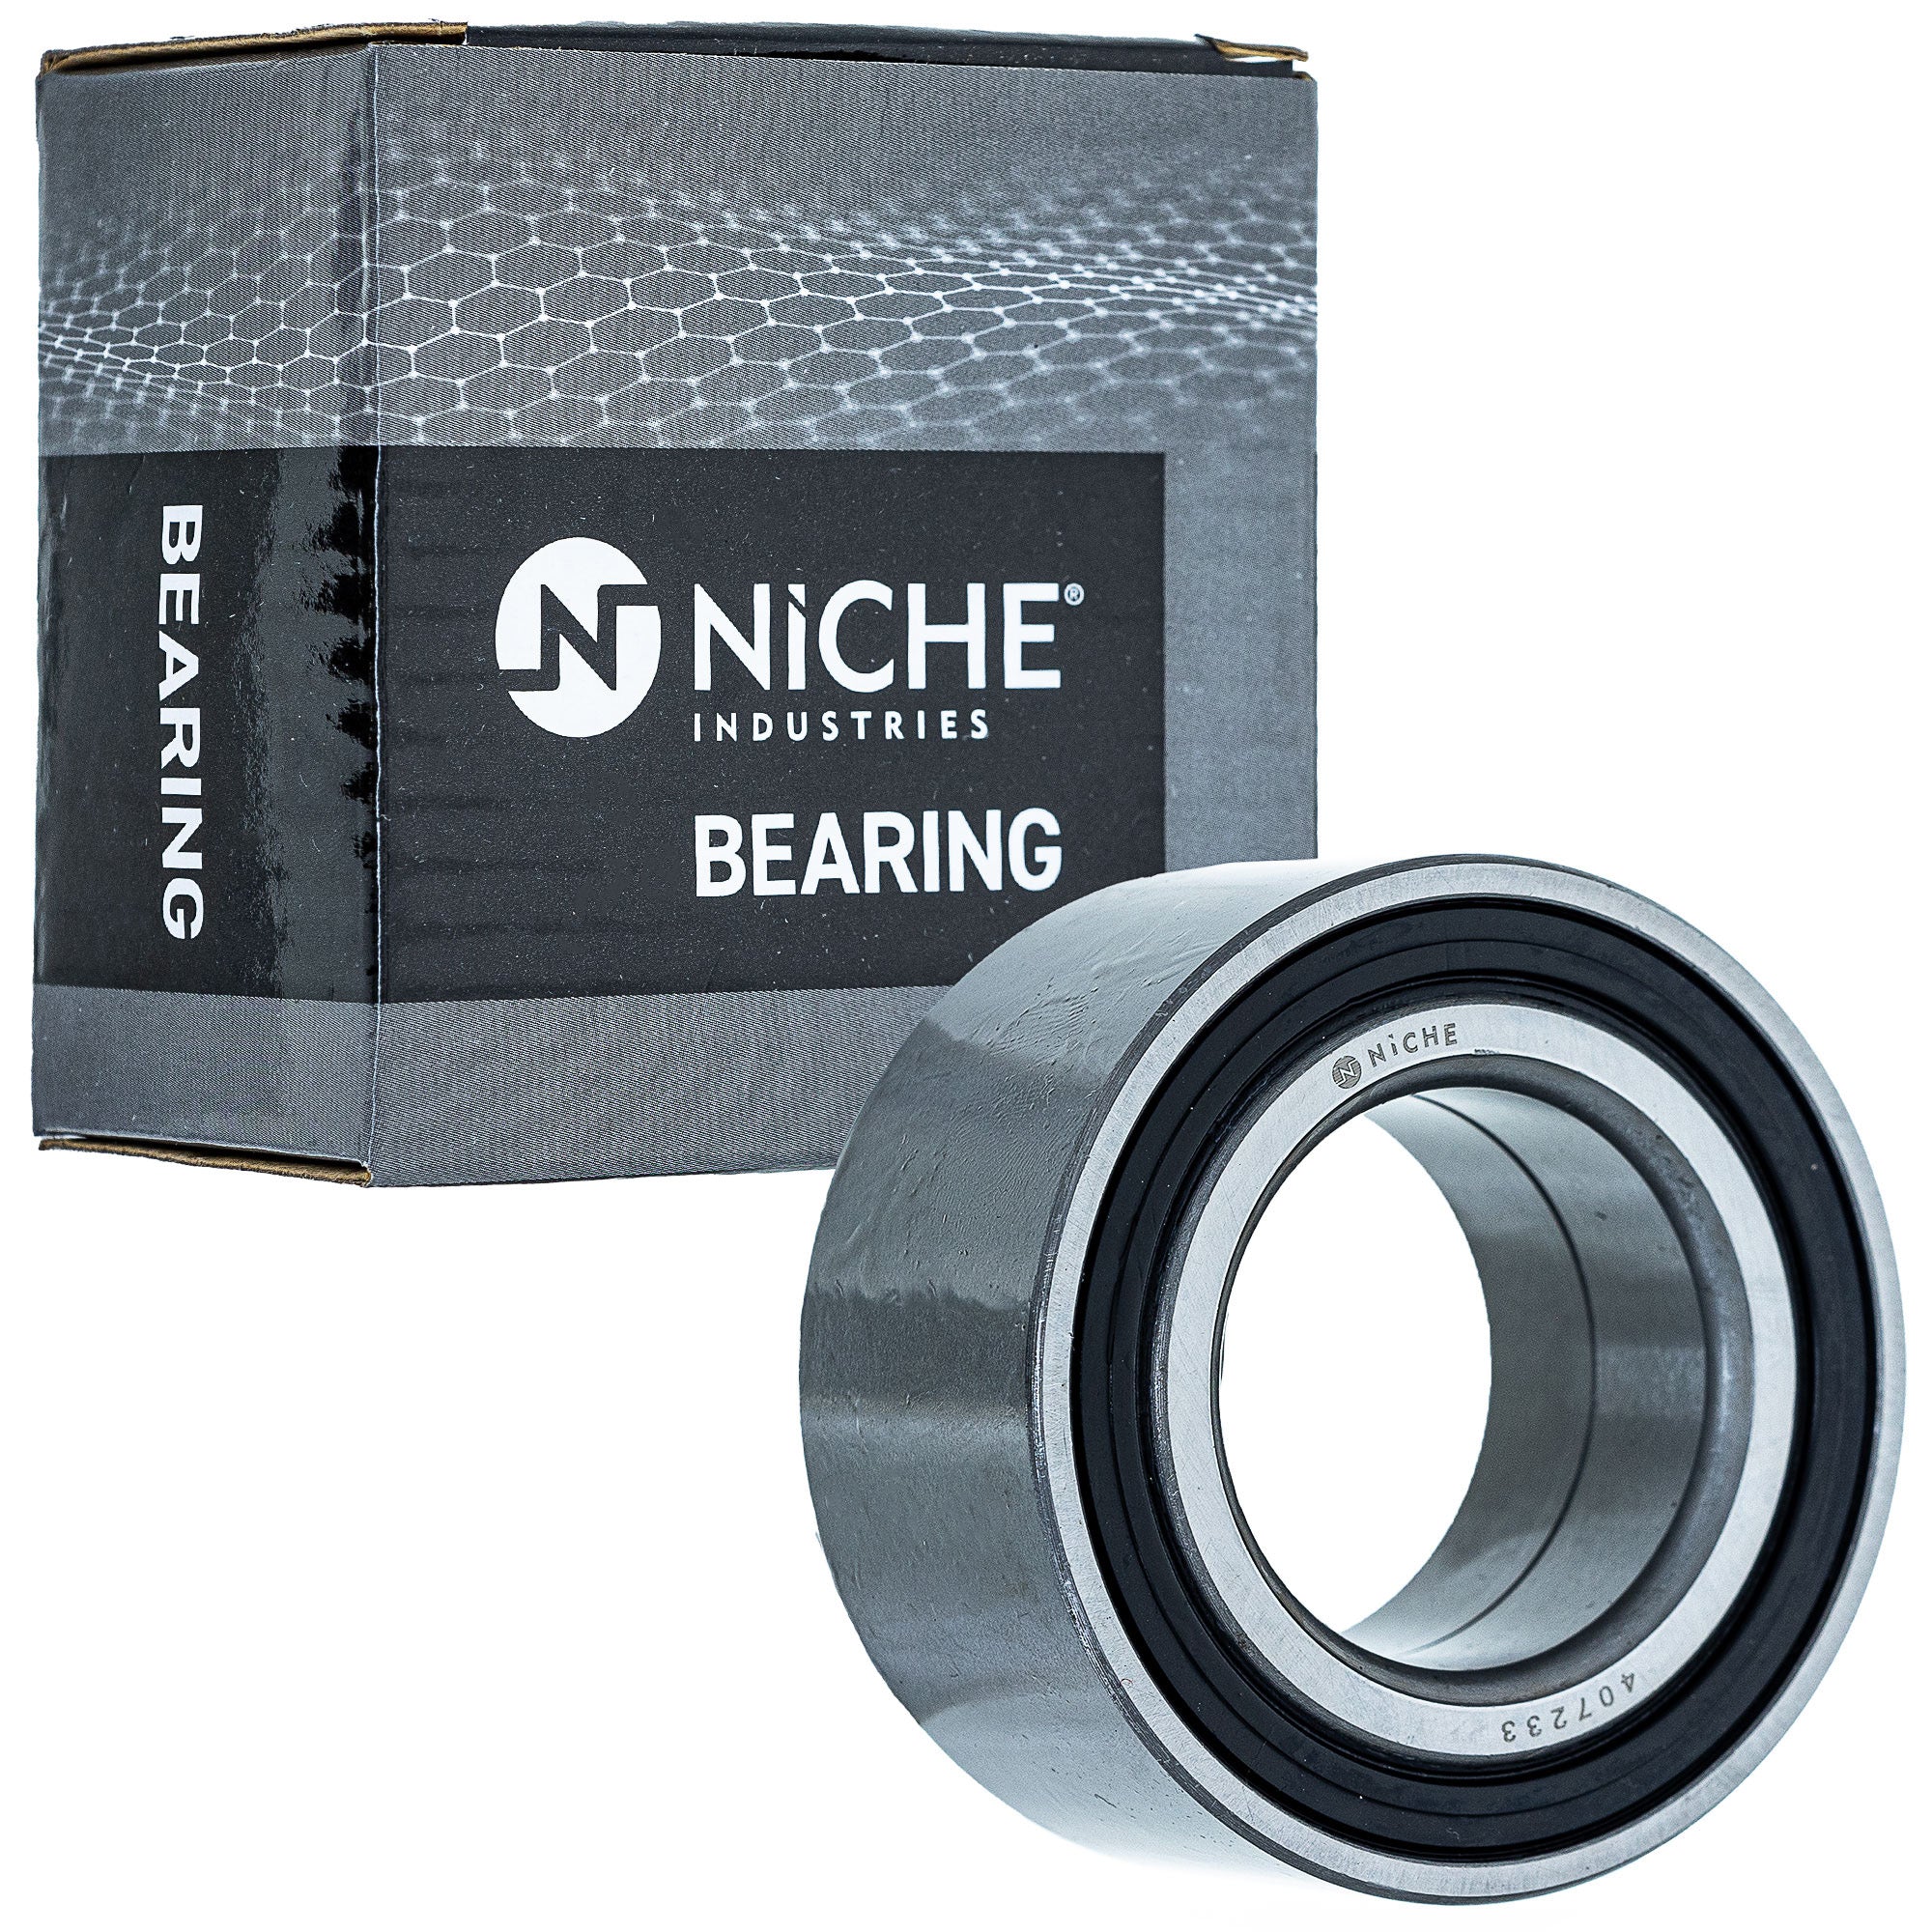 NICHE 519-CBB2292R Bearing 10-Pack for zOTHER Polaris RZR Quadrunner